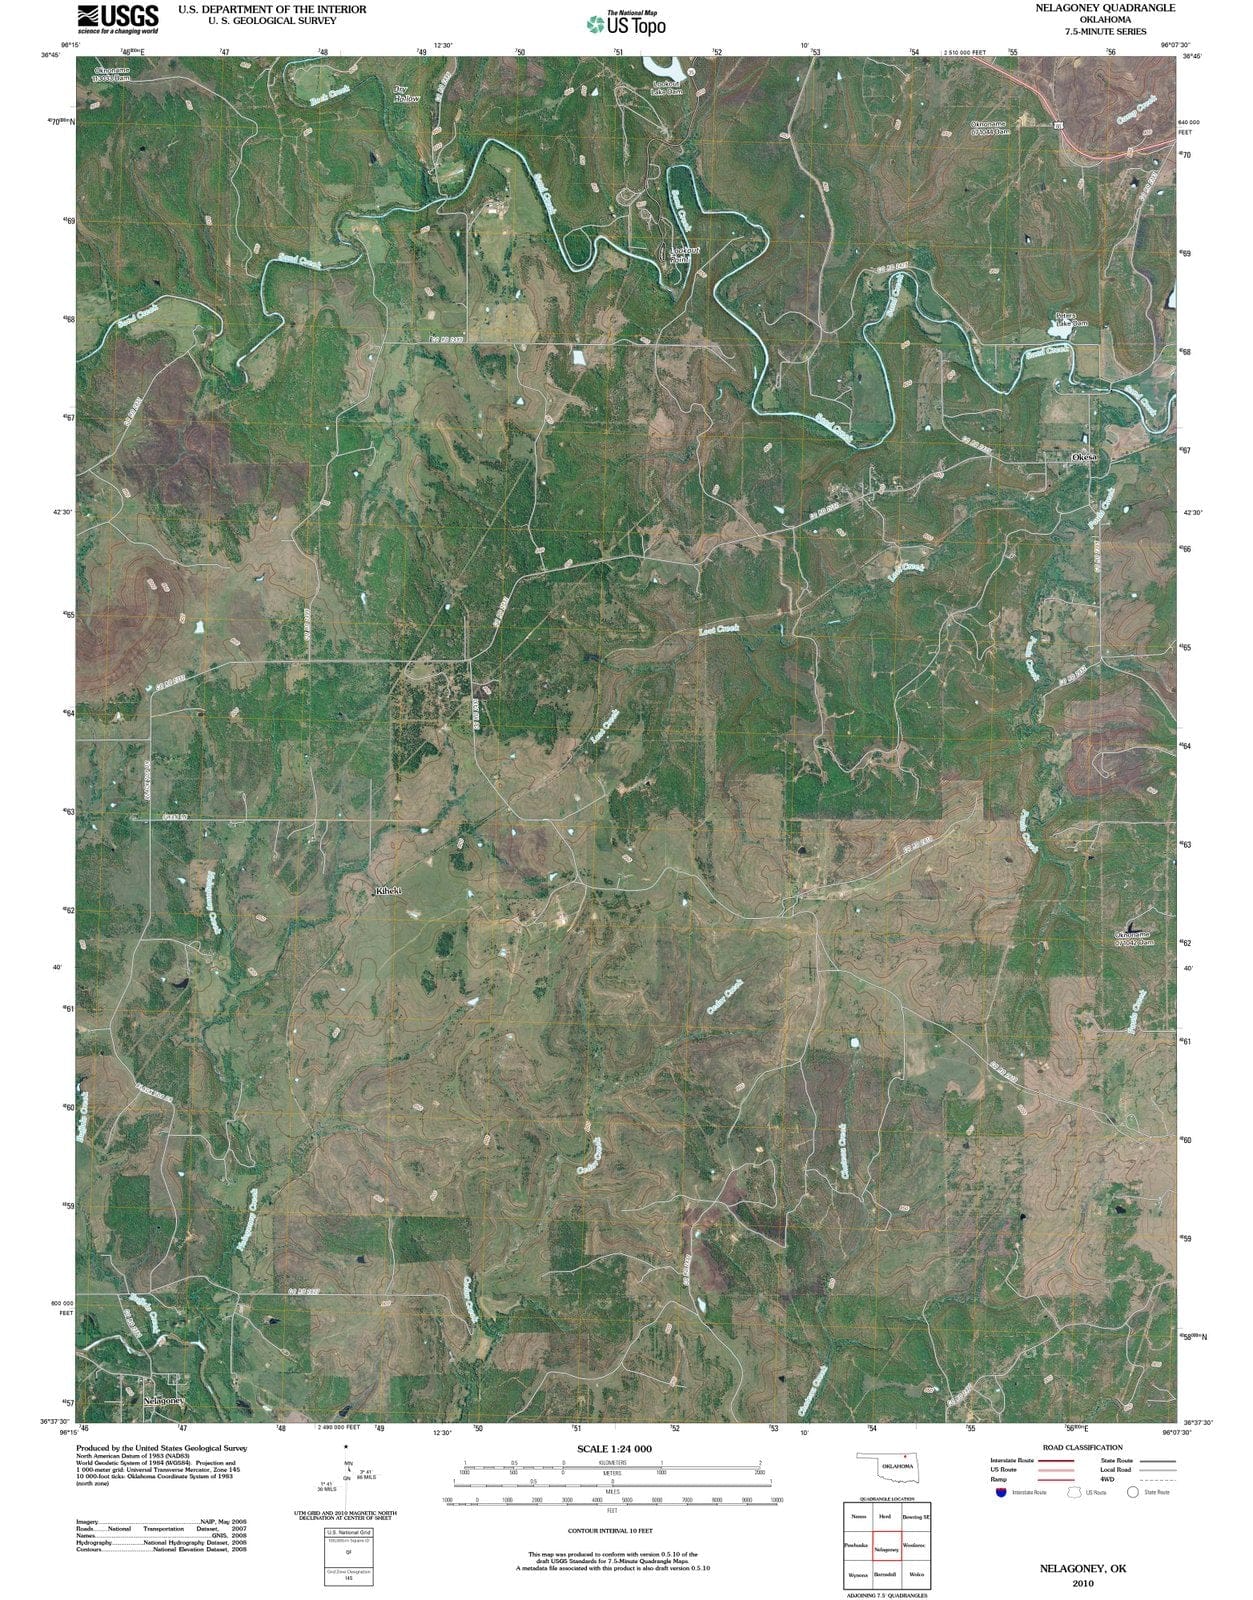 2010 Nelagoney, OK - Oklahoma - USGS Topographic Map